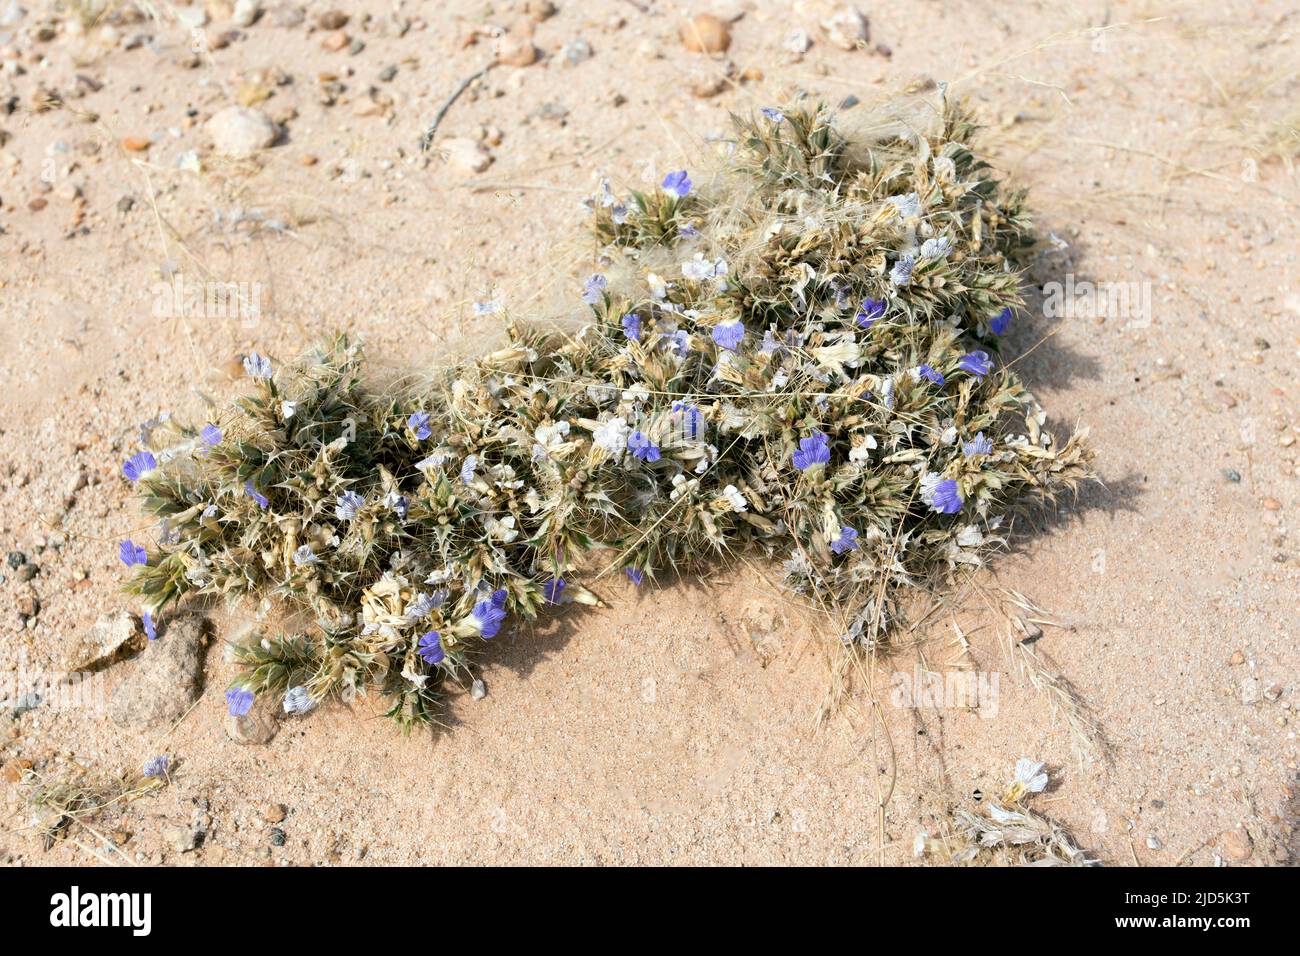 View of blepharis plant in Namibia desert Stock Photo